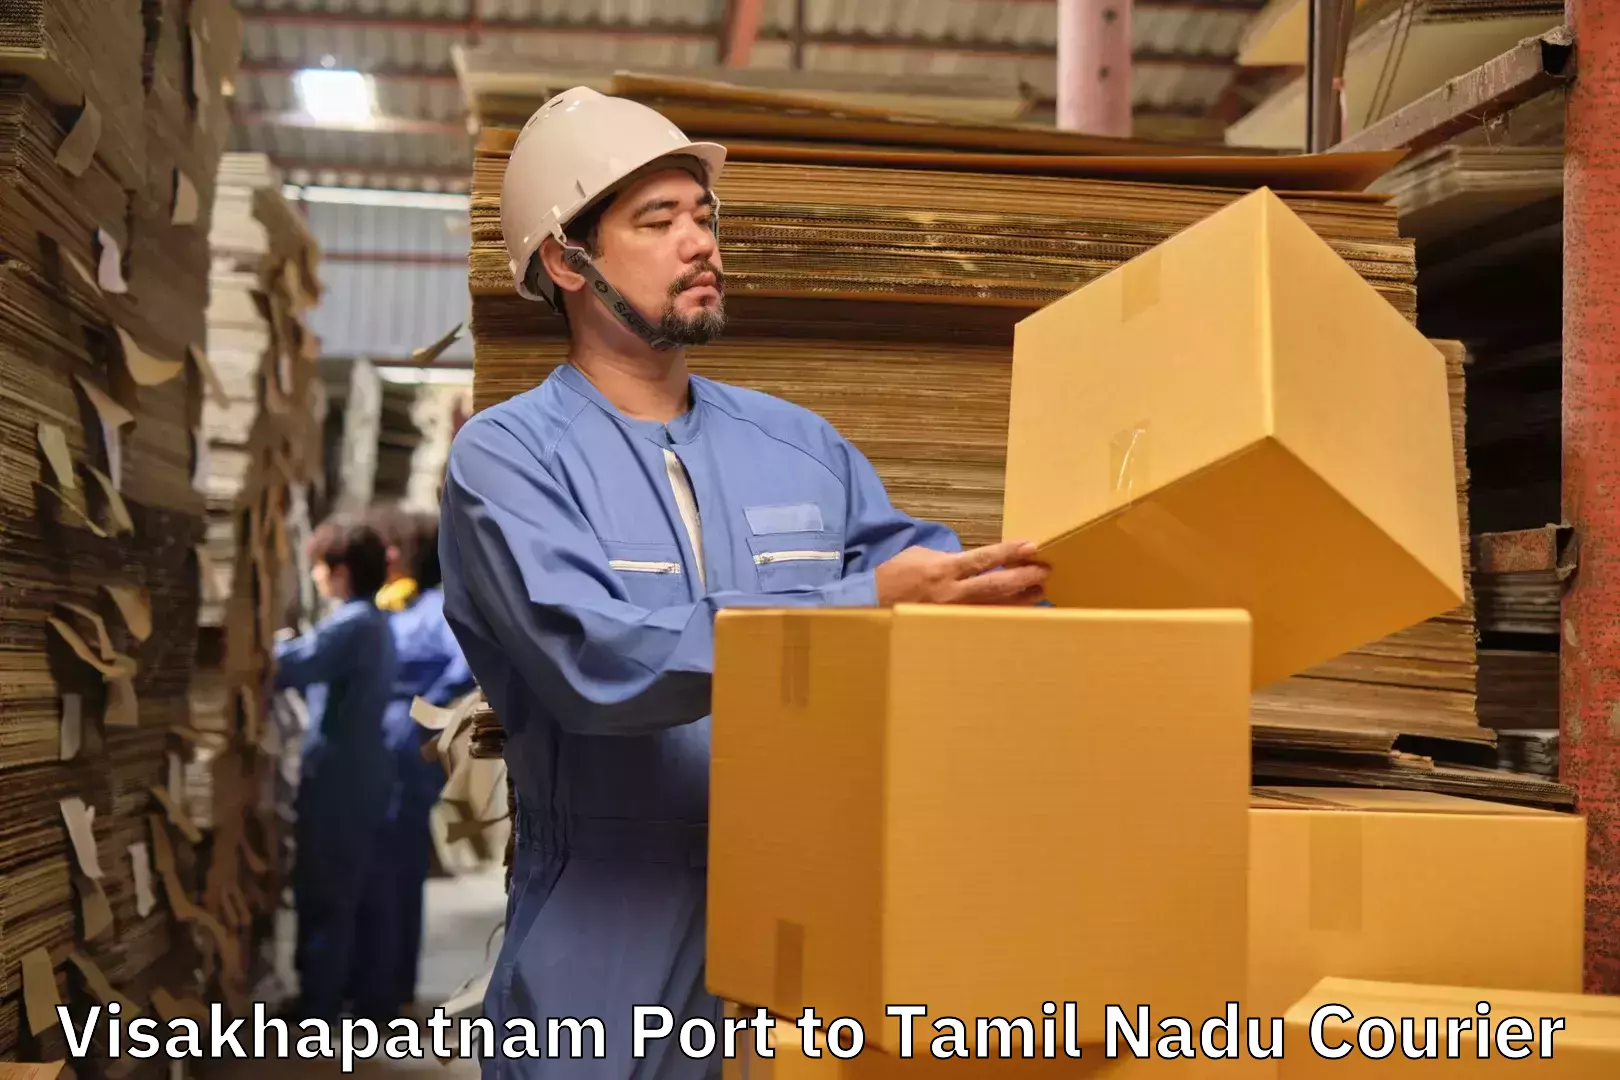 Luggage shipment specialists Visakhapatnam Port to Salem